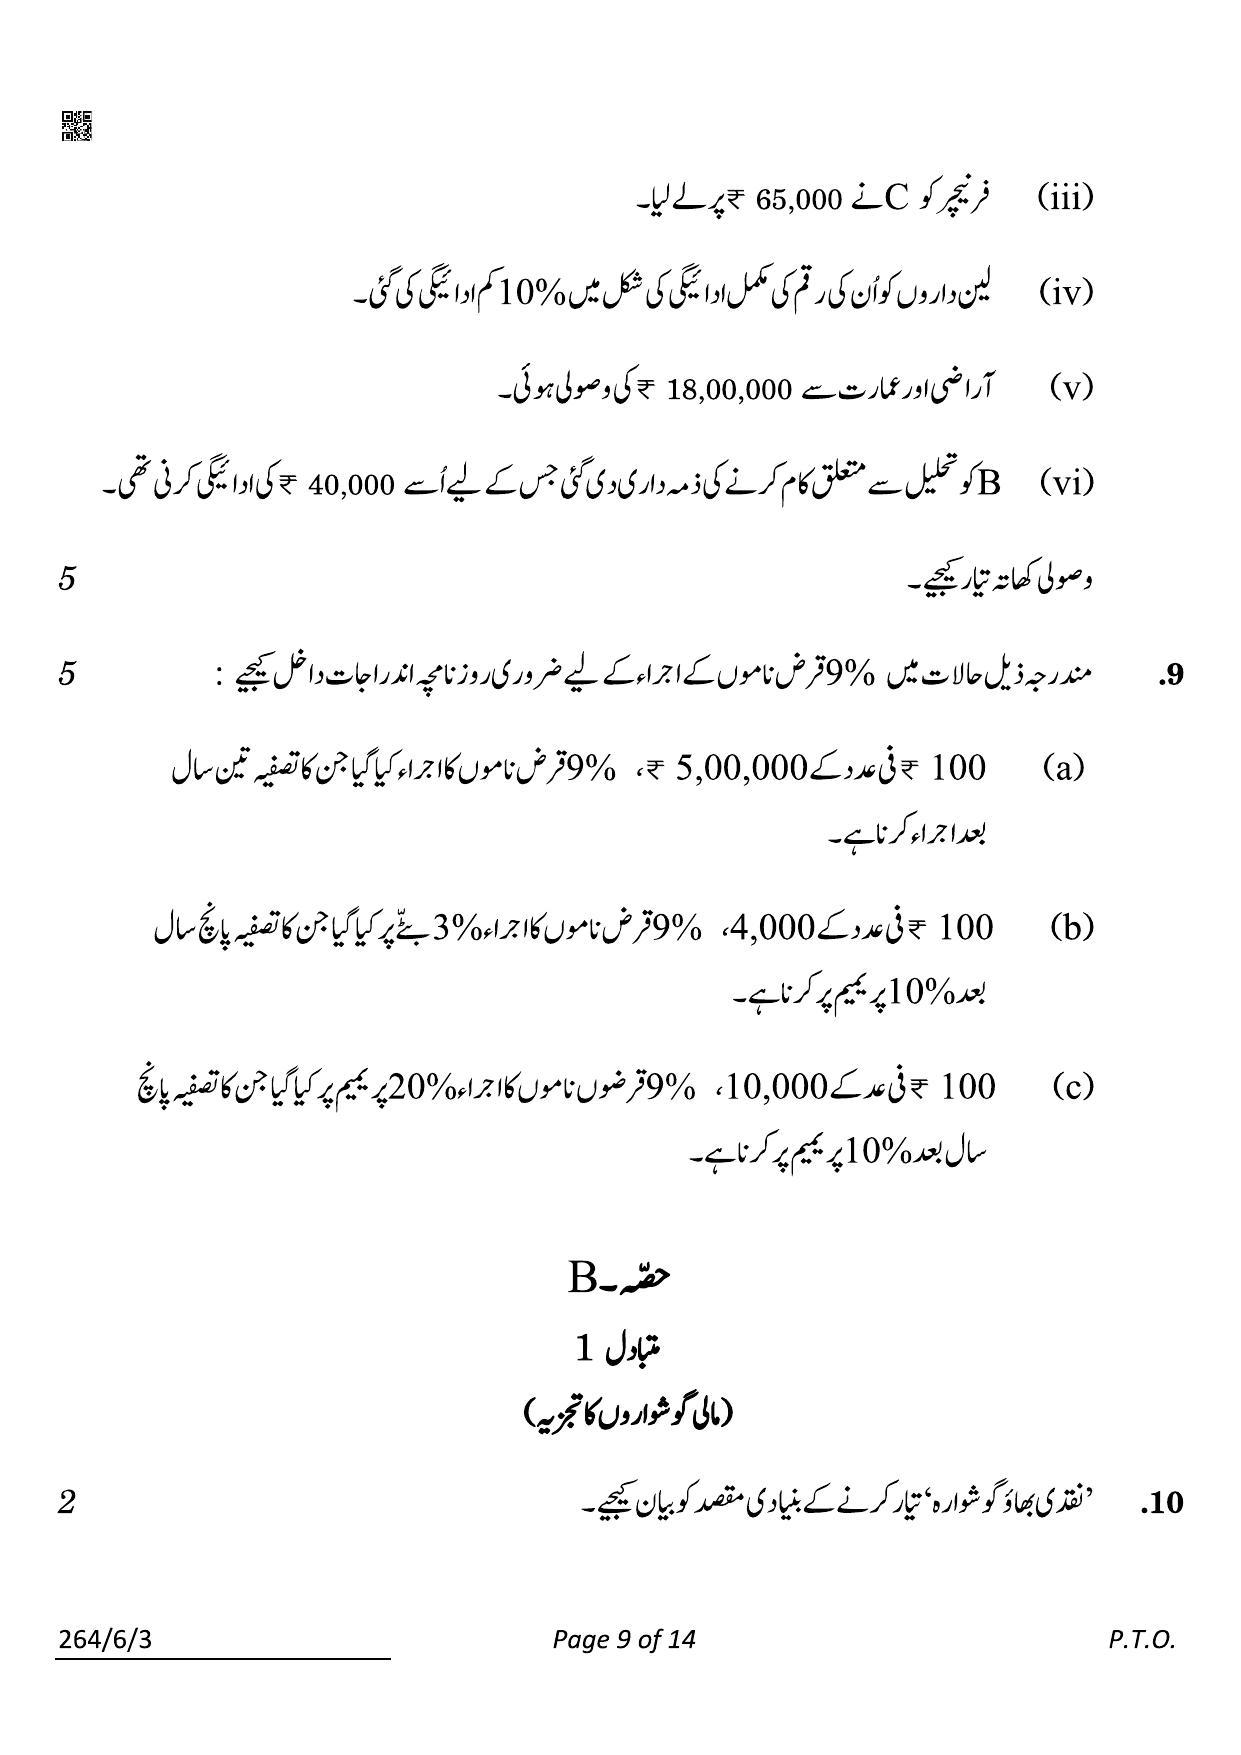 CBSE Class 12 264-6-3 Accountancy Urdu 2022 Compartment Question Paper - Page 9